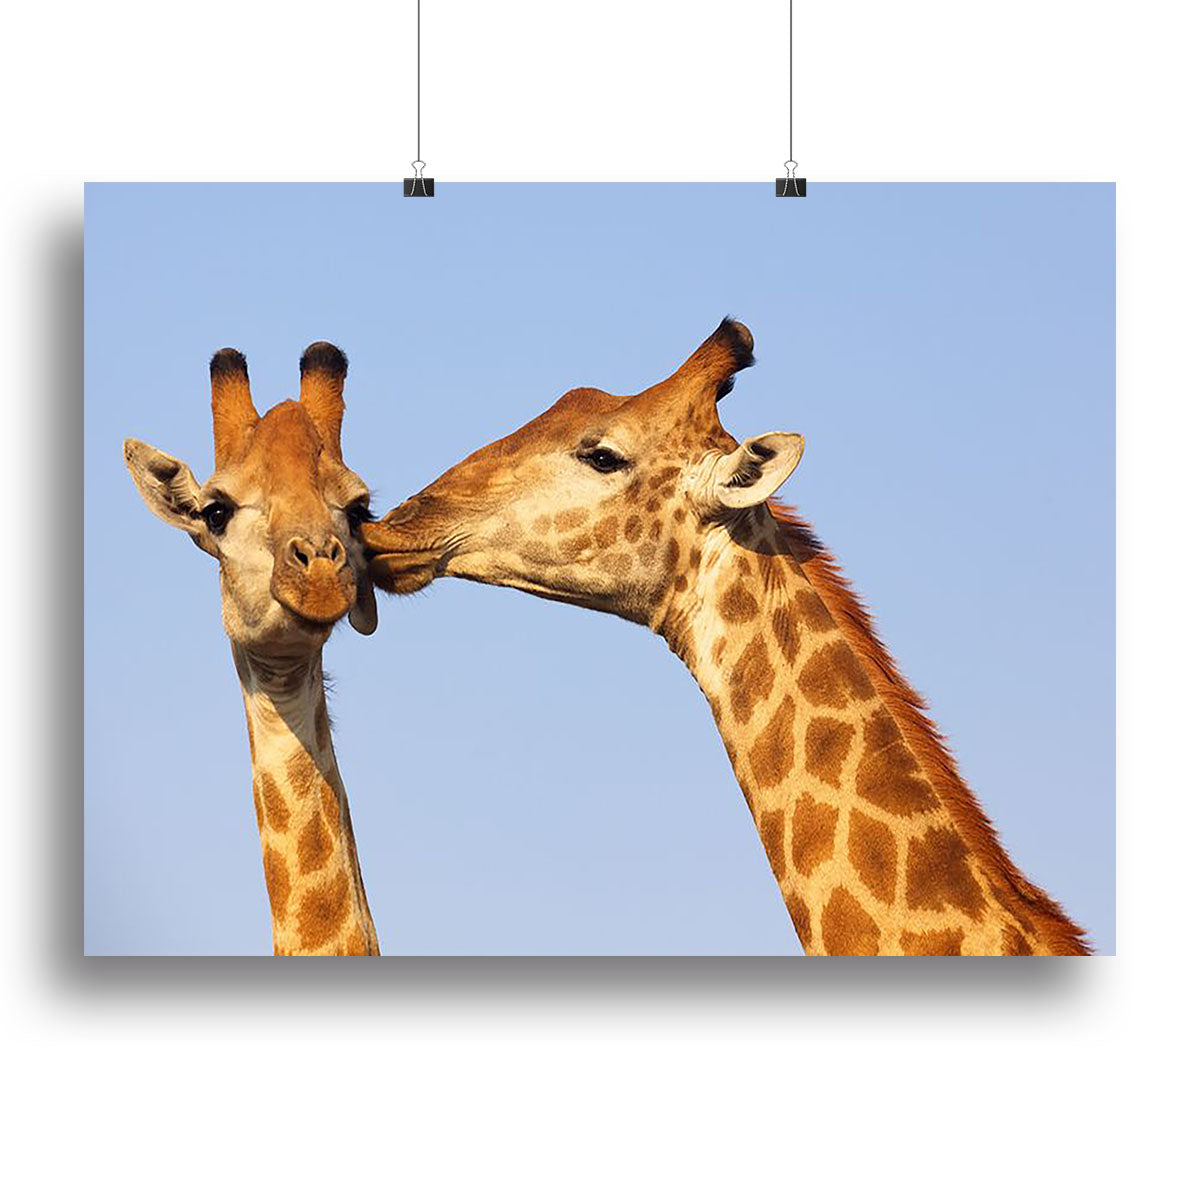 Giraffe pair bonding Canvas Print or Poster - Canvas Art Rocks - 2